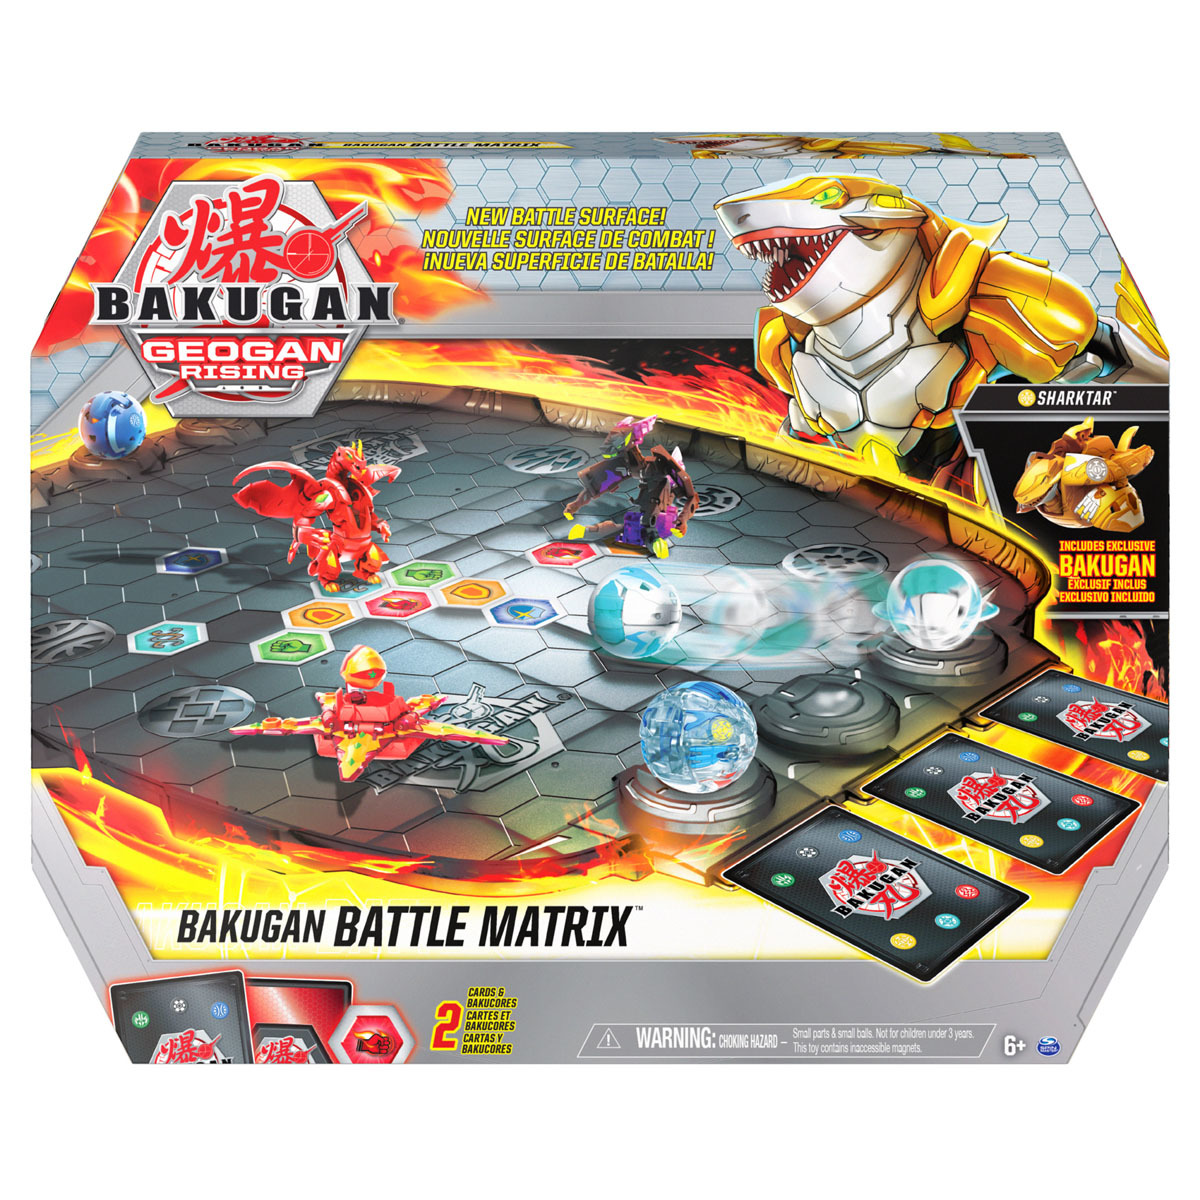 Bakugan Battle Arena, Game Board for Bakugan Collectibles